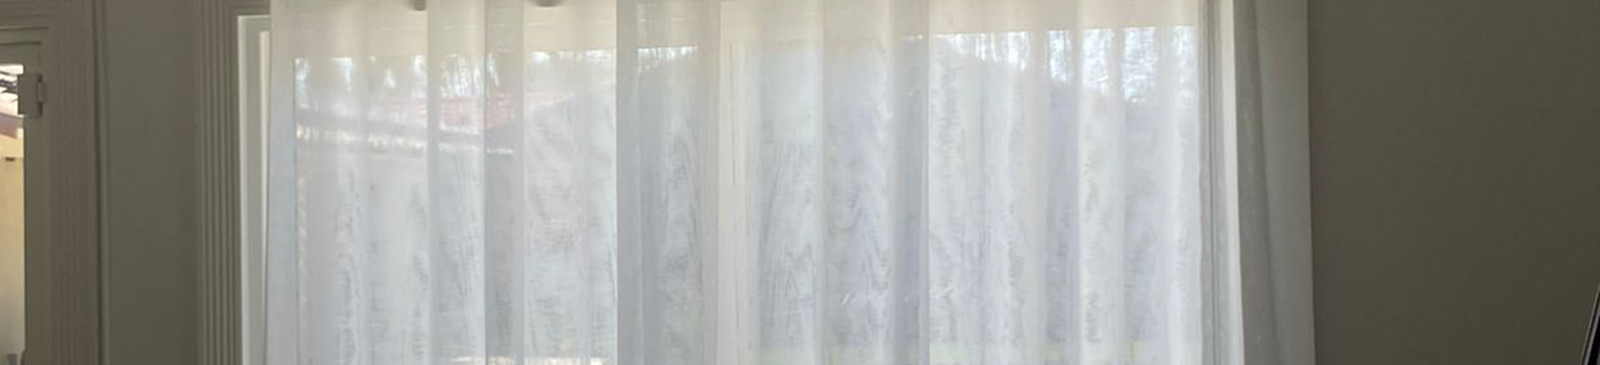 Custom Curtains in Berkeley